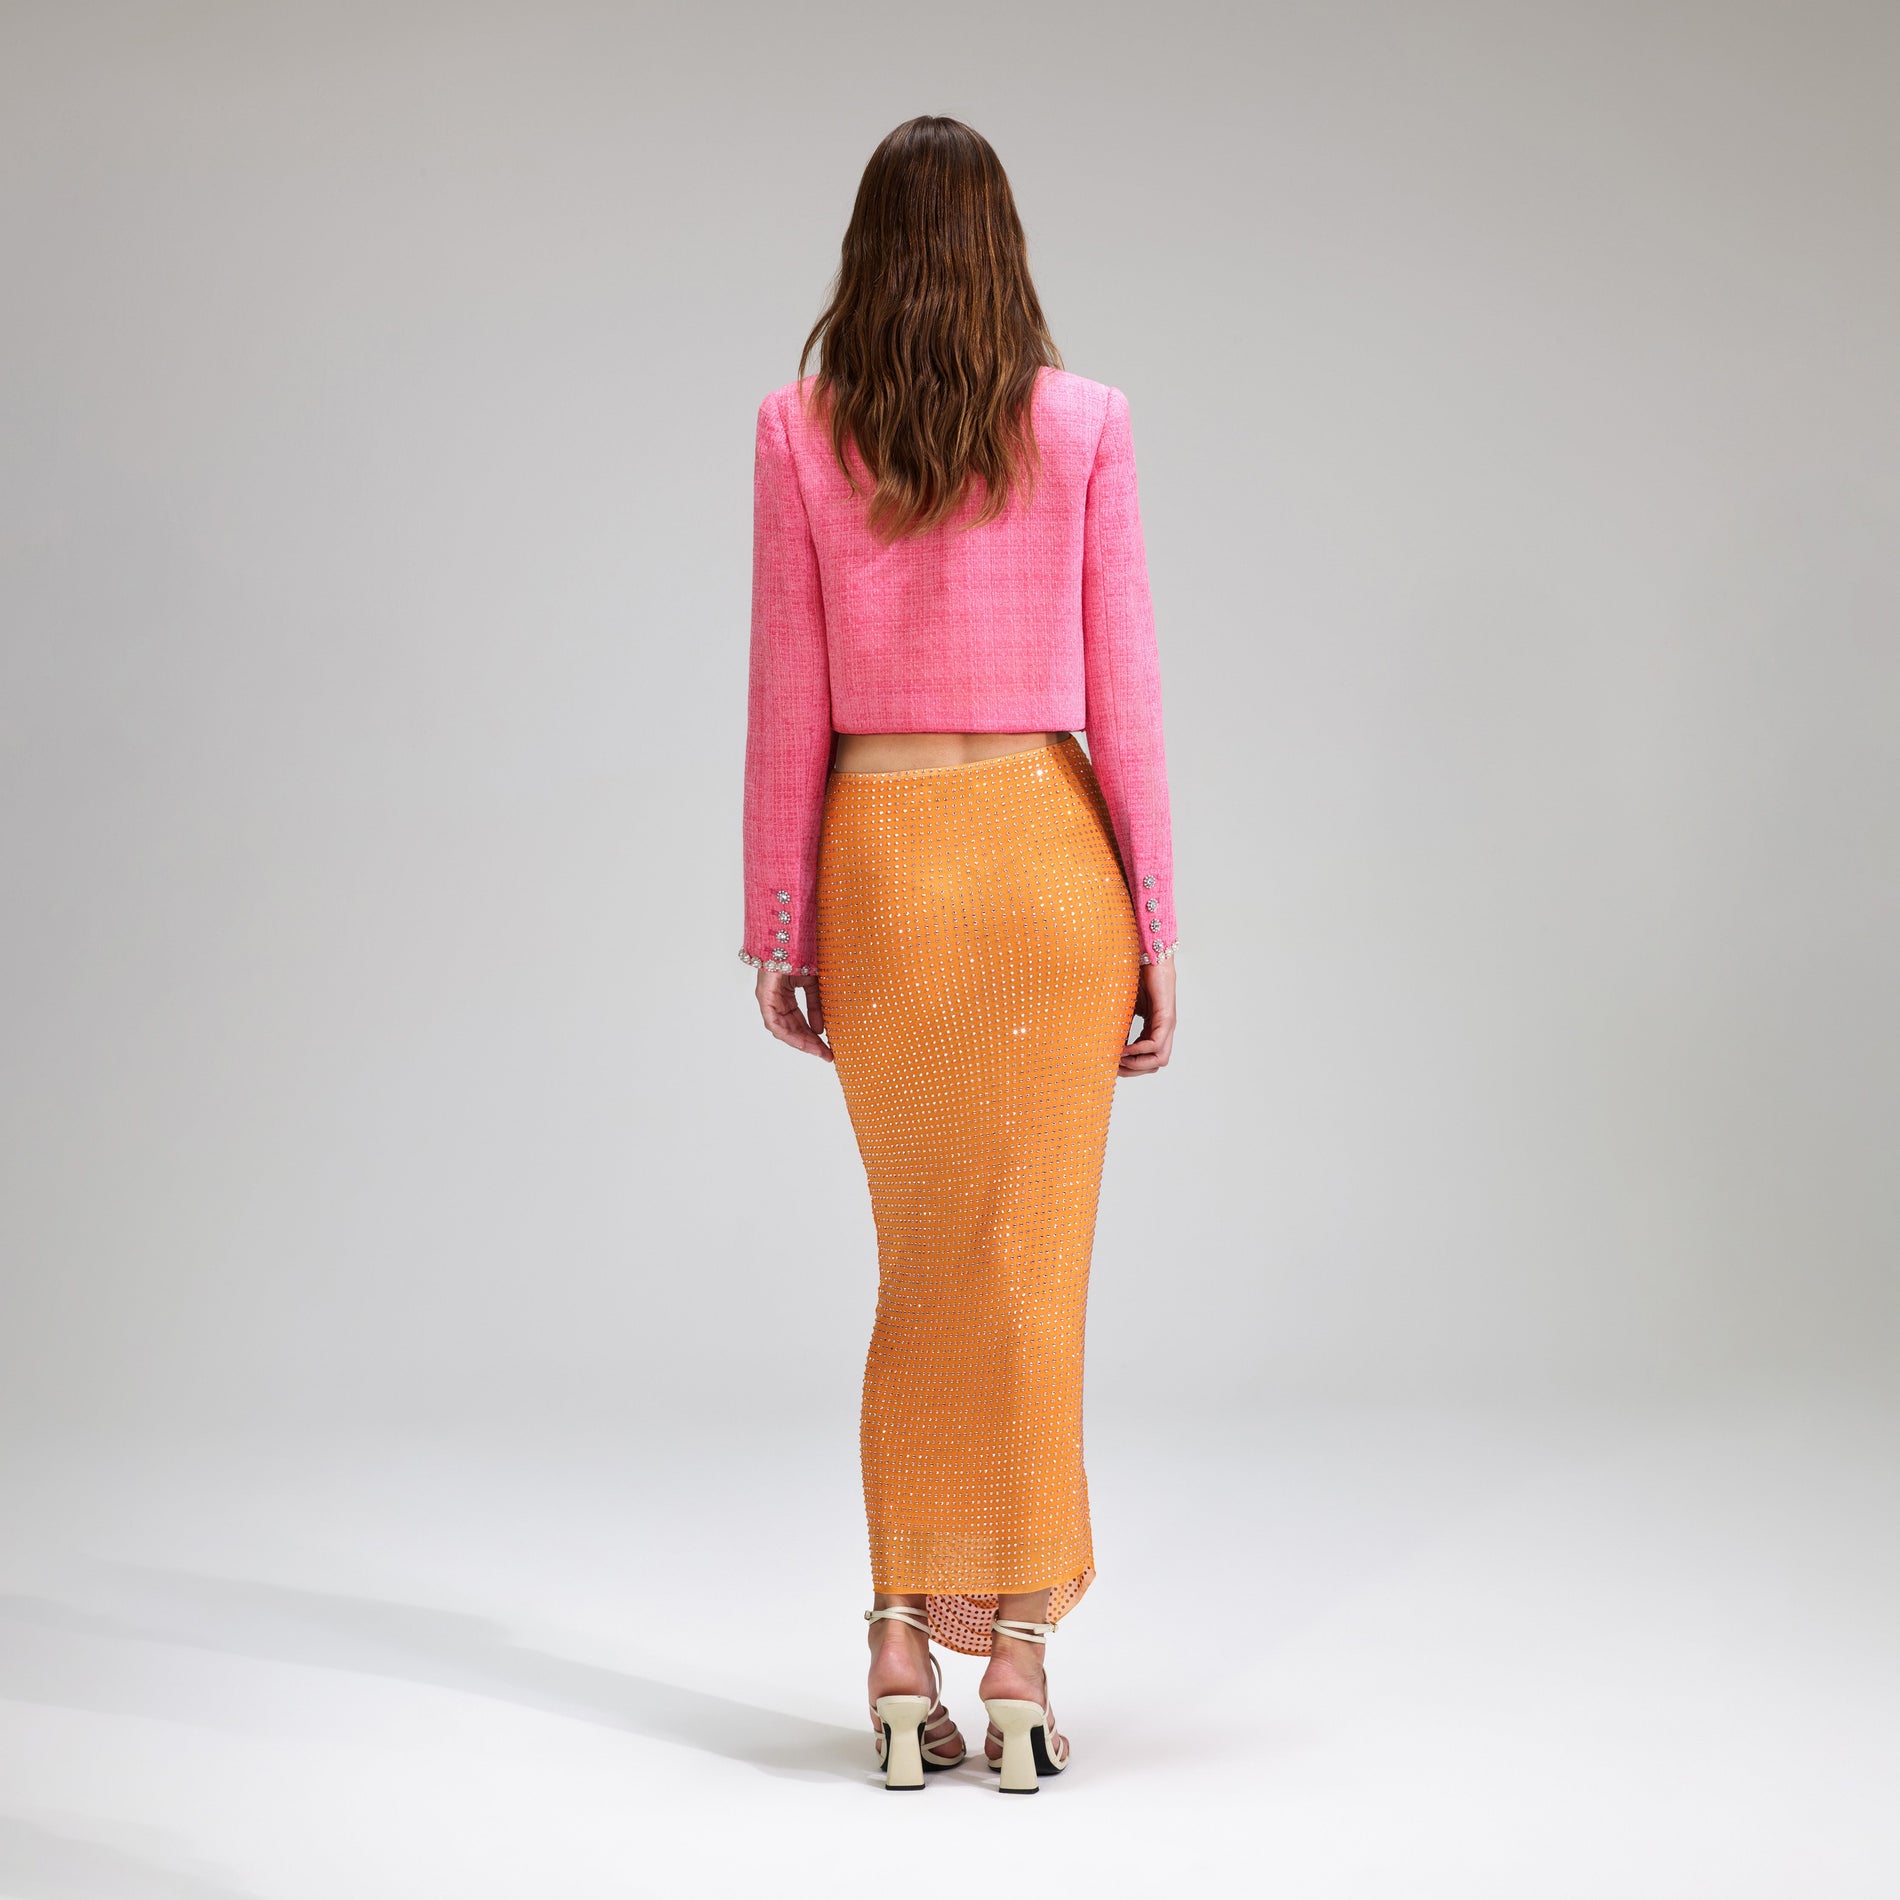 A woman wearing the Orange Rhinestone Mesh Midi Skirt